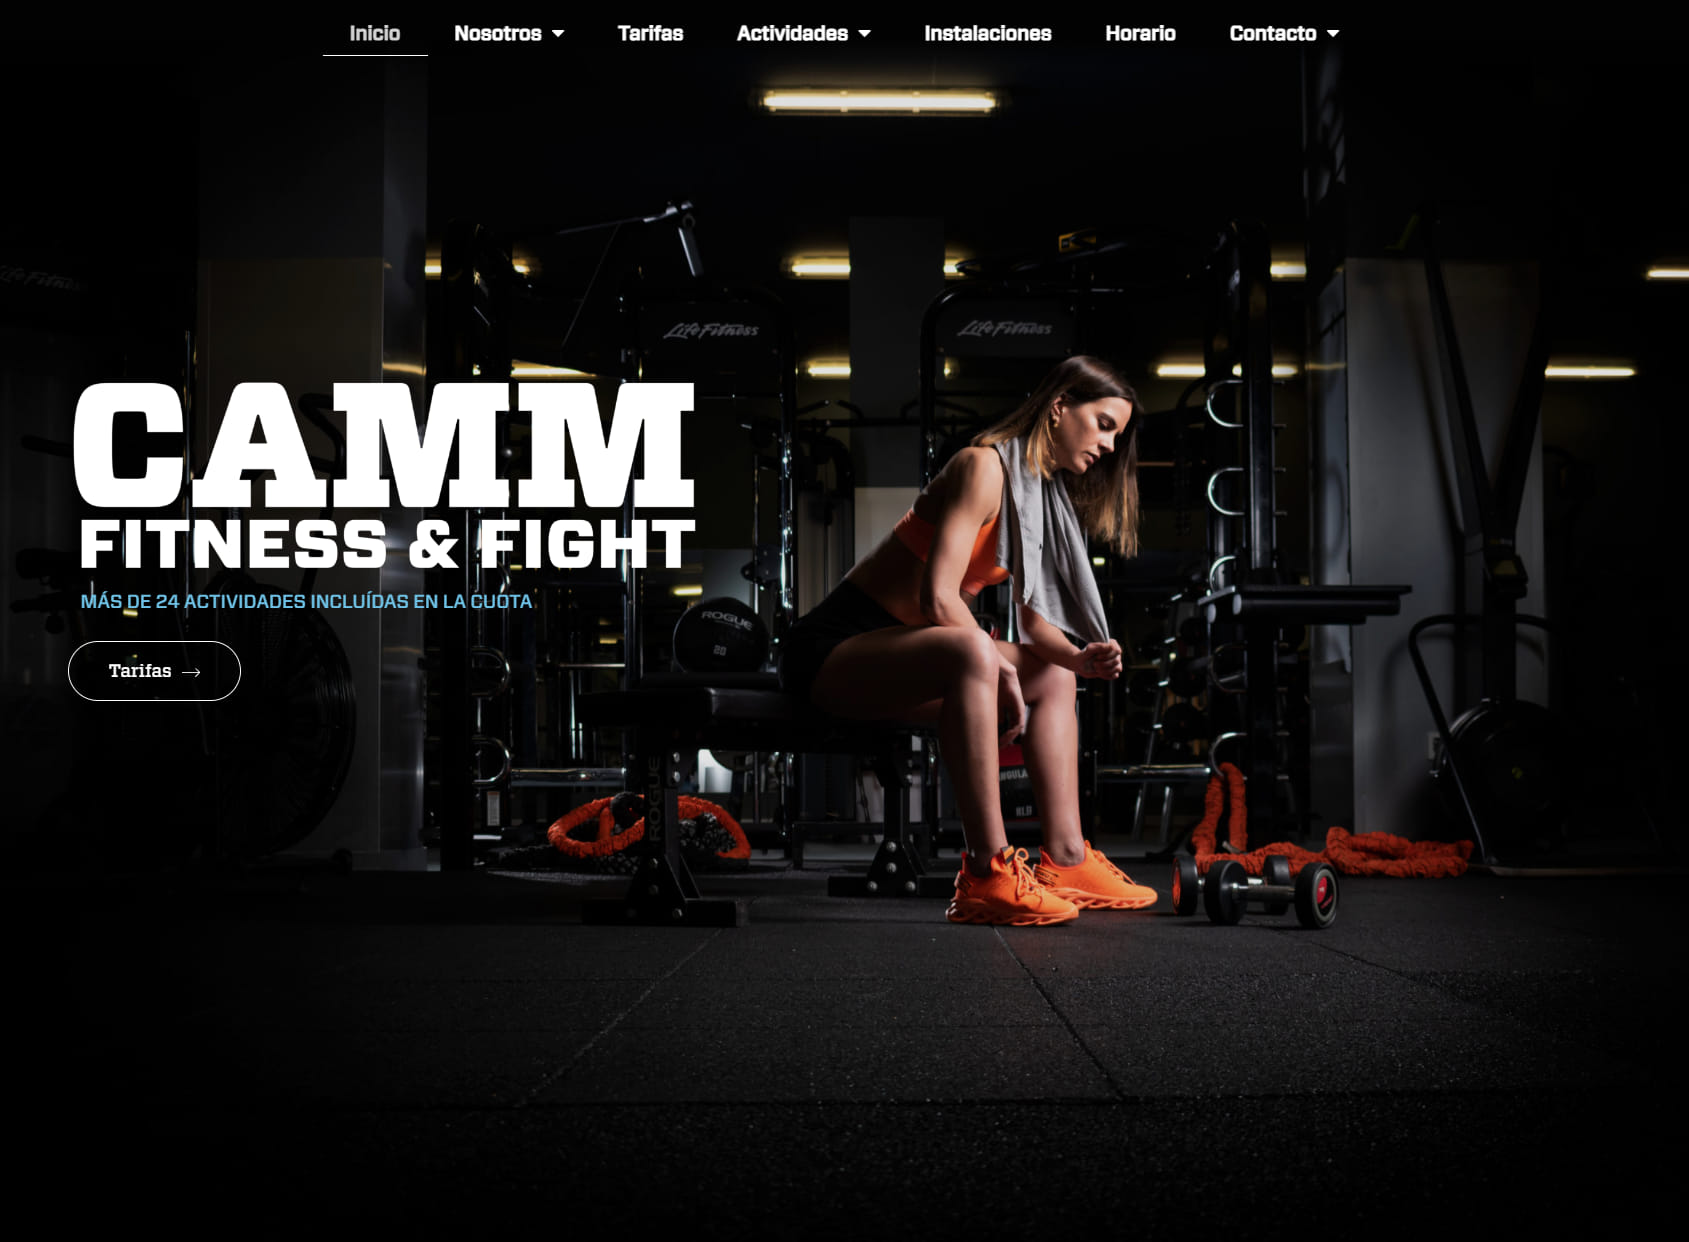 CAMM Fitness & Fight